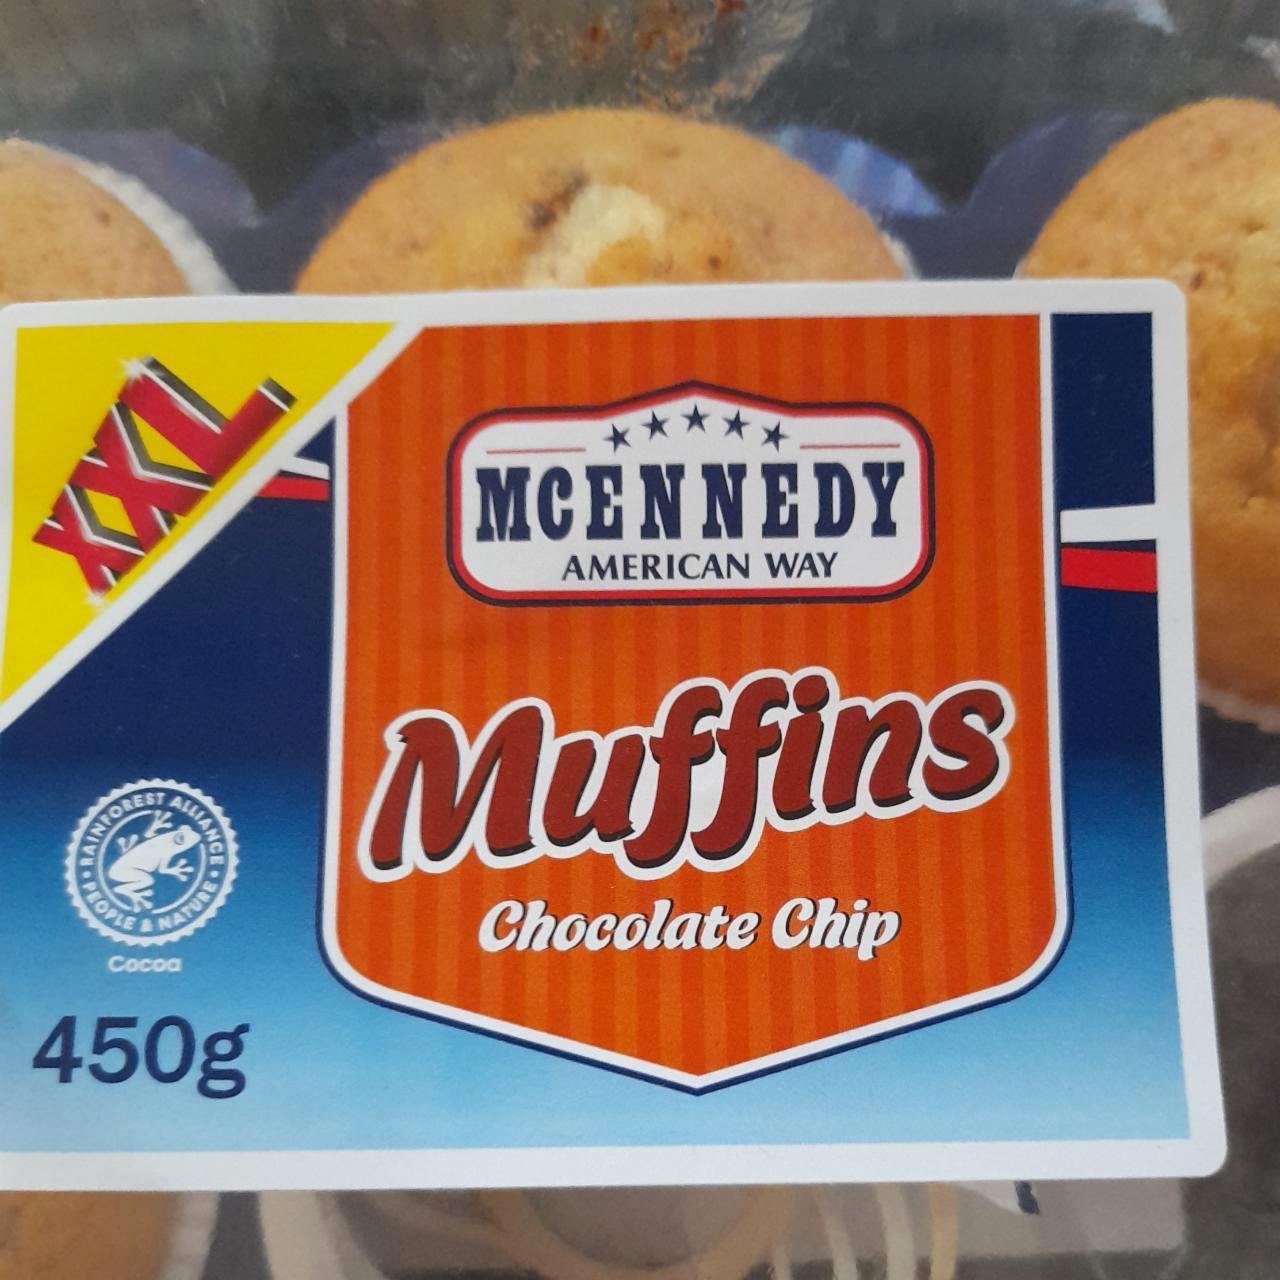 Muffins chocolate chip Mcennedy American way - kalória, kJ és tápértékek